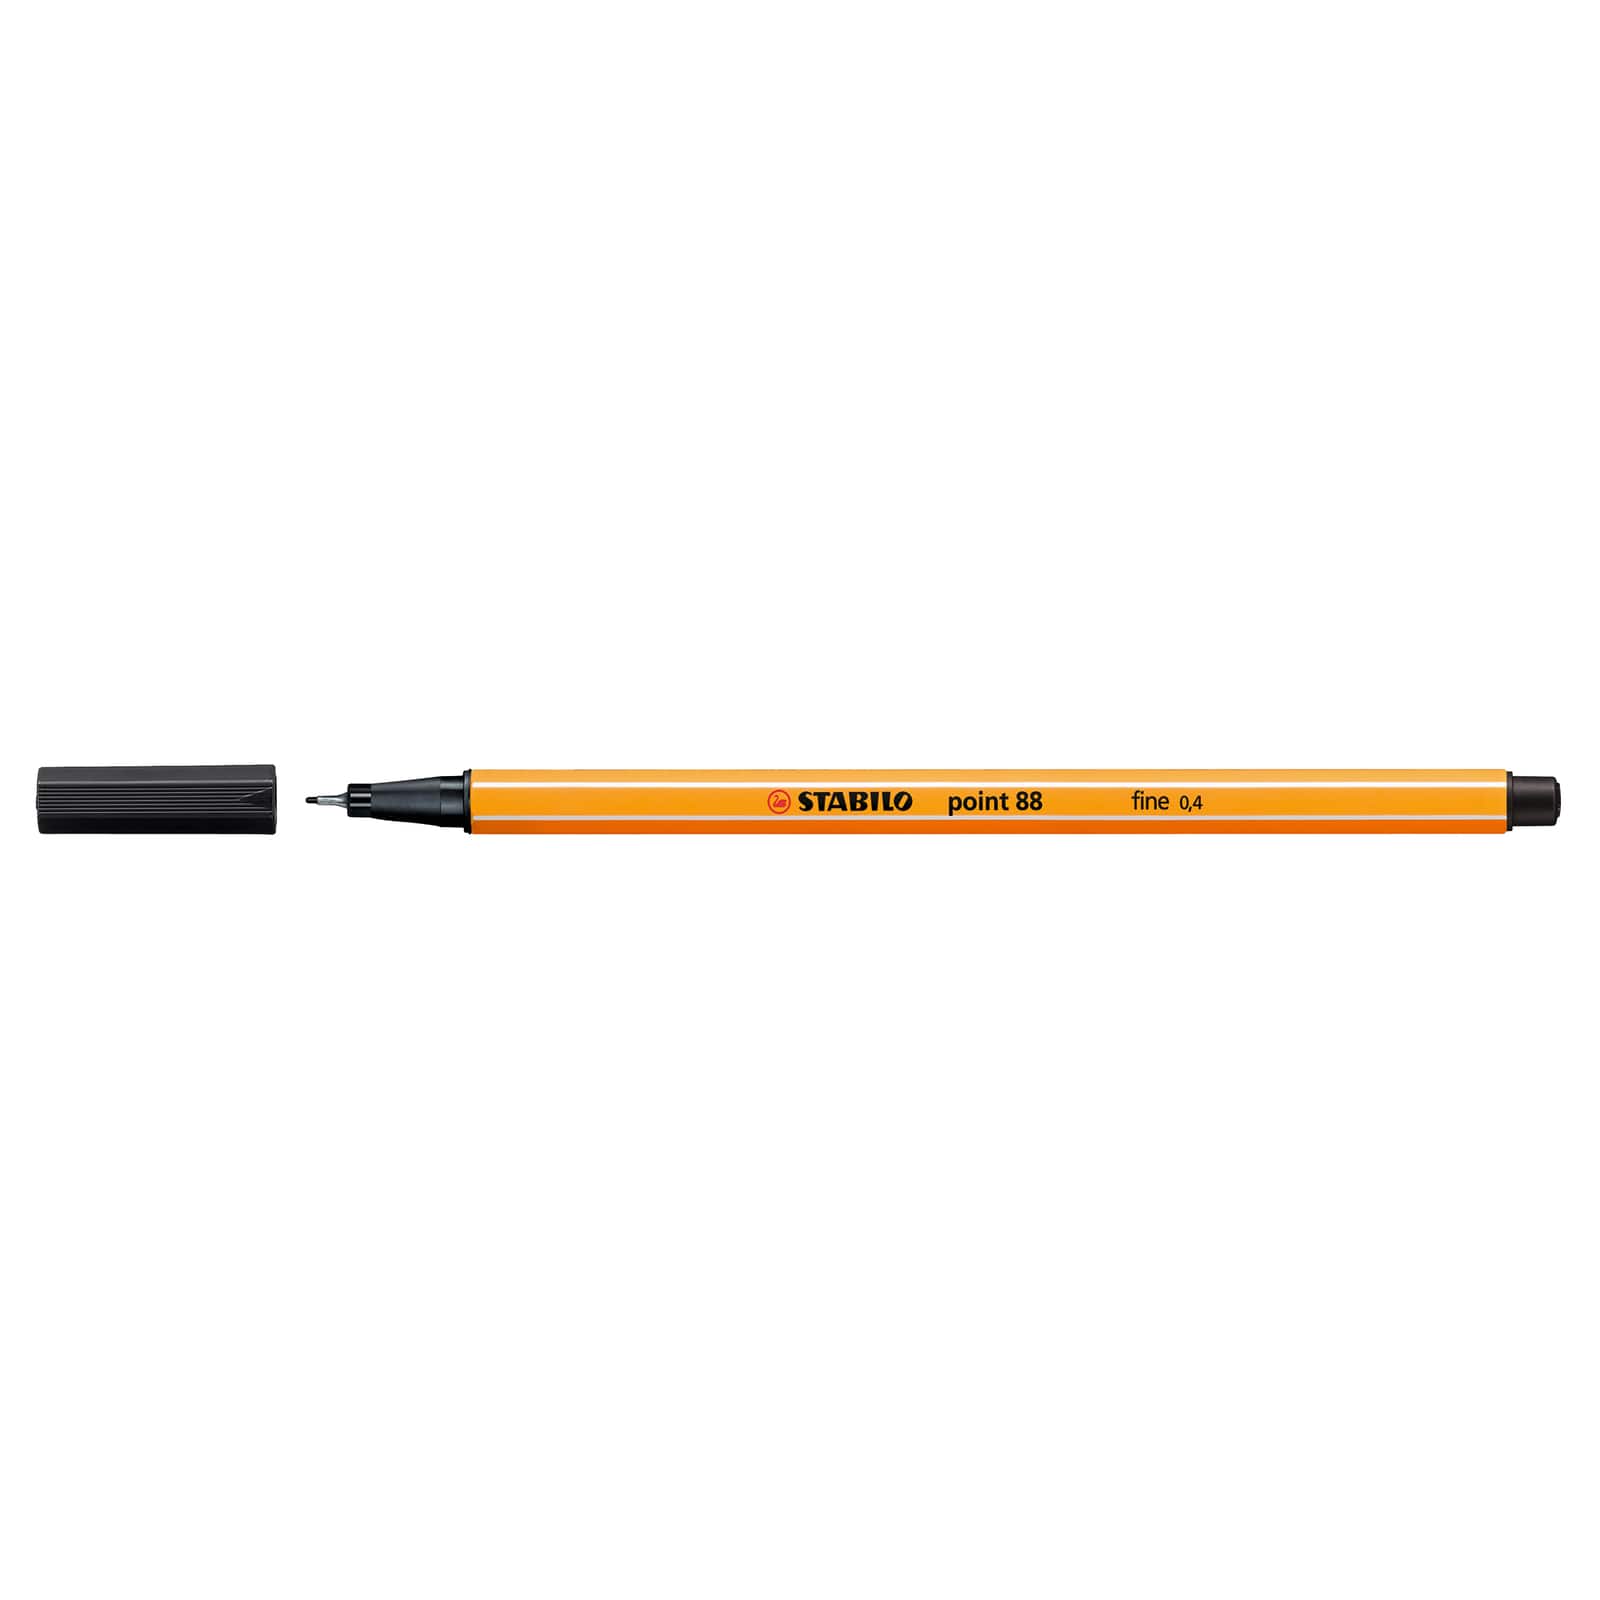 Integra 36211 Fineliner Ultra Fine Tip Marker Pen